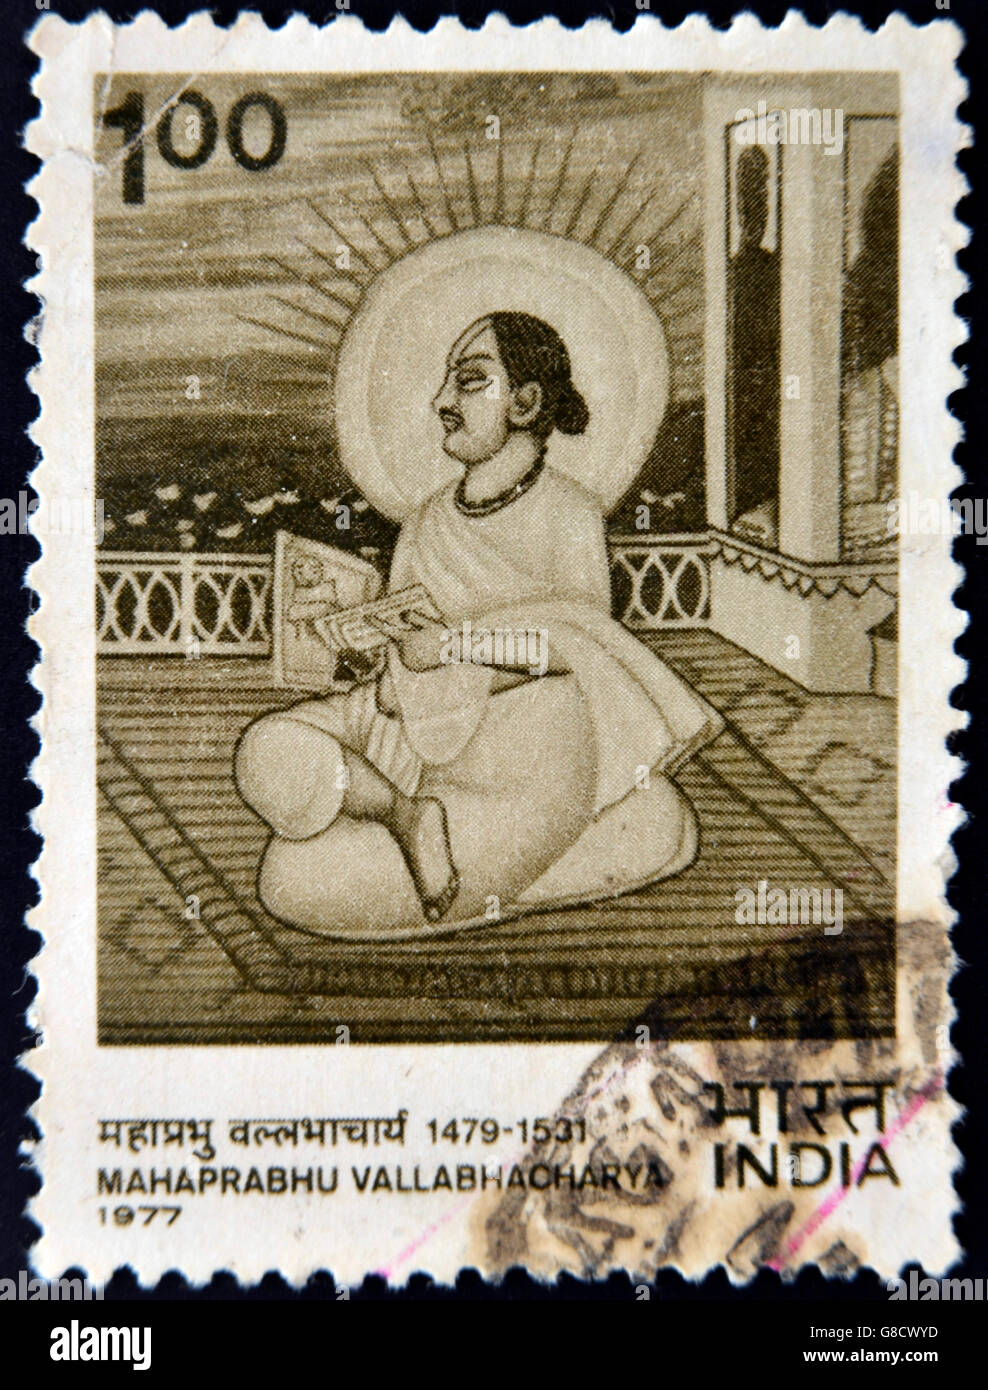 INDIA - CIRCA 1977: A stamp printed in India shows mahaprabhu vallabhacharya,circa 1977 Stock Photo